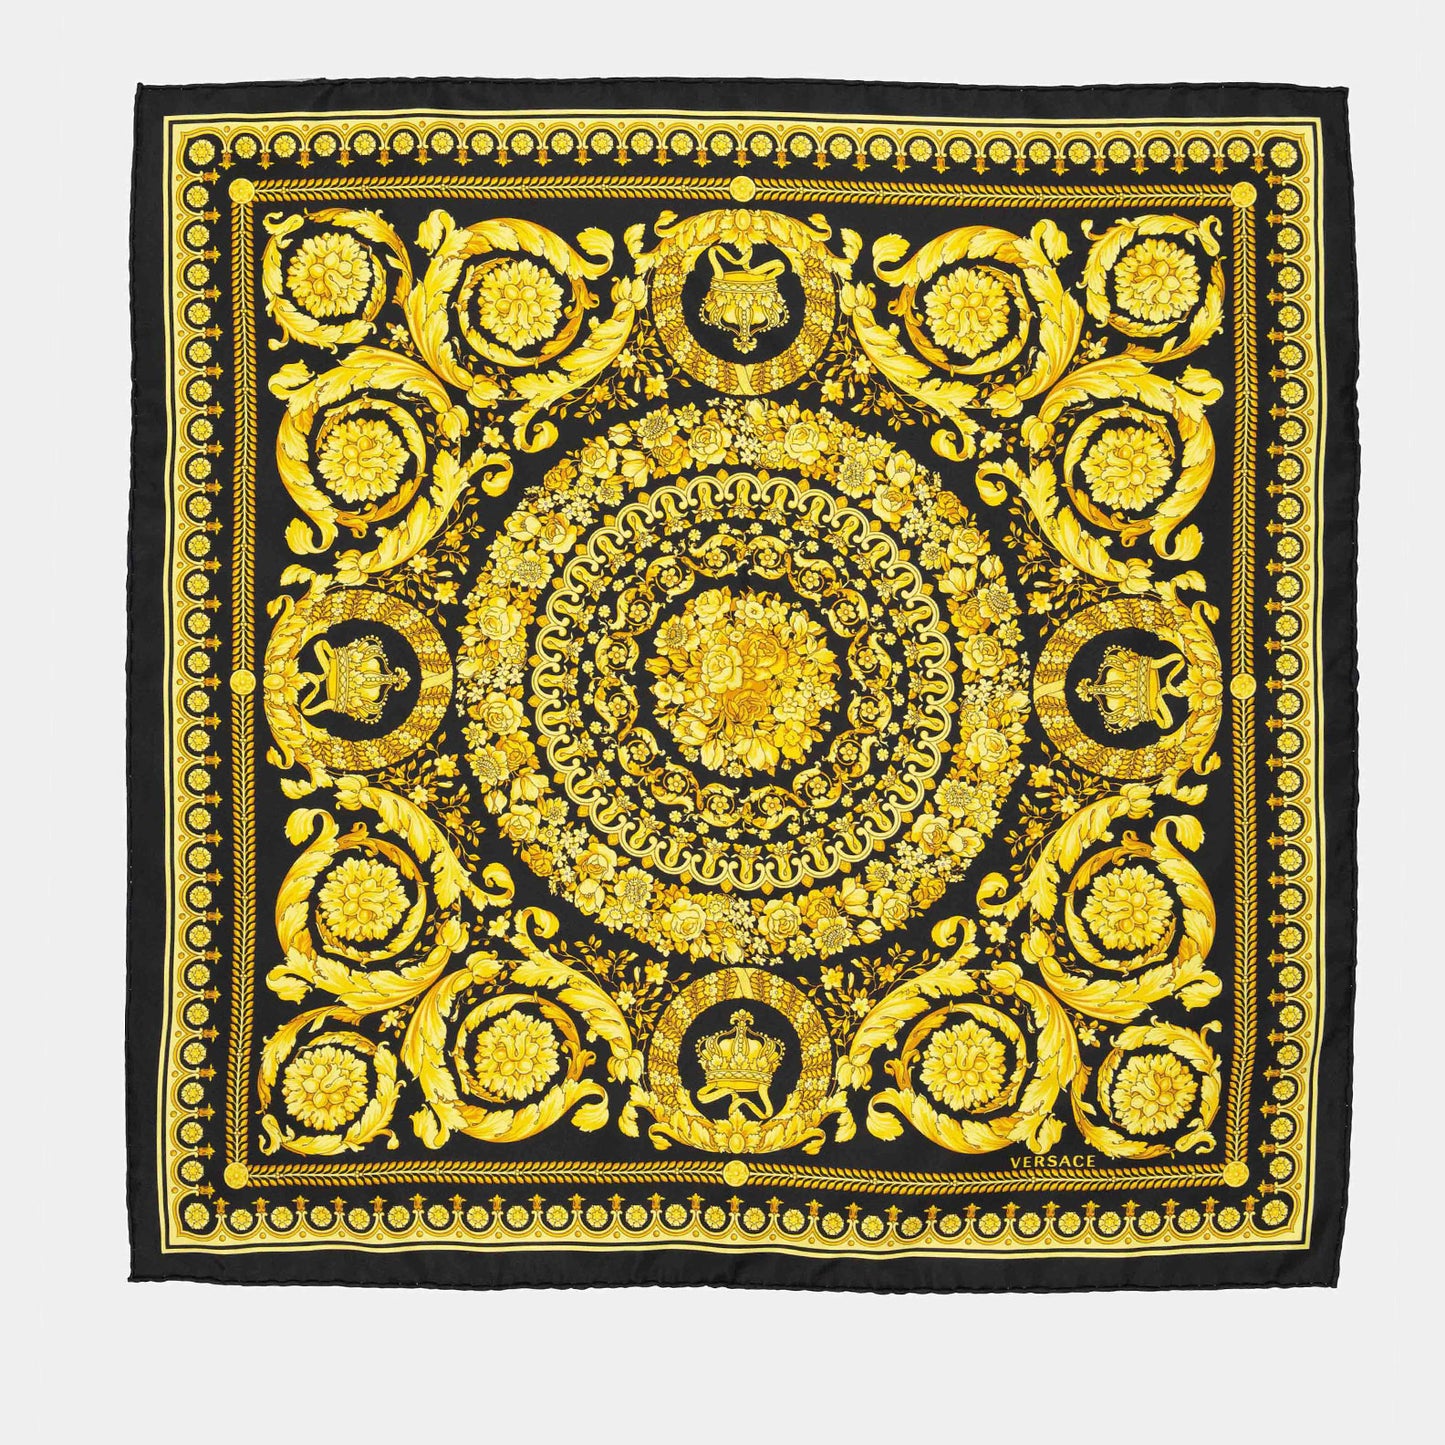 Barocco silk scarf